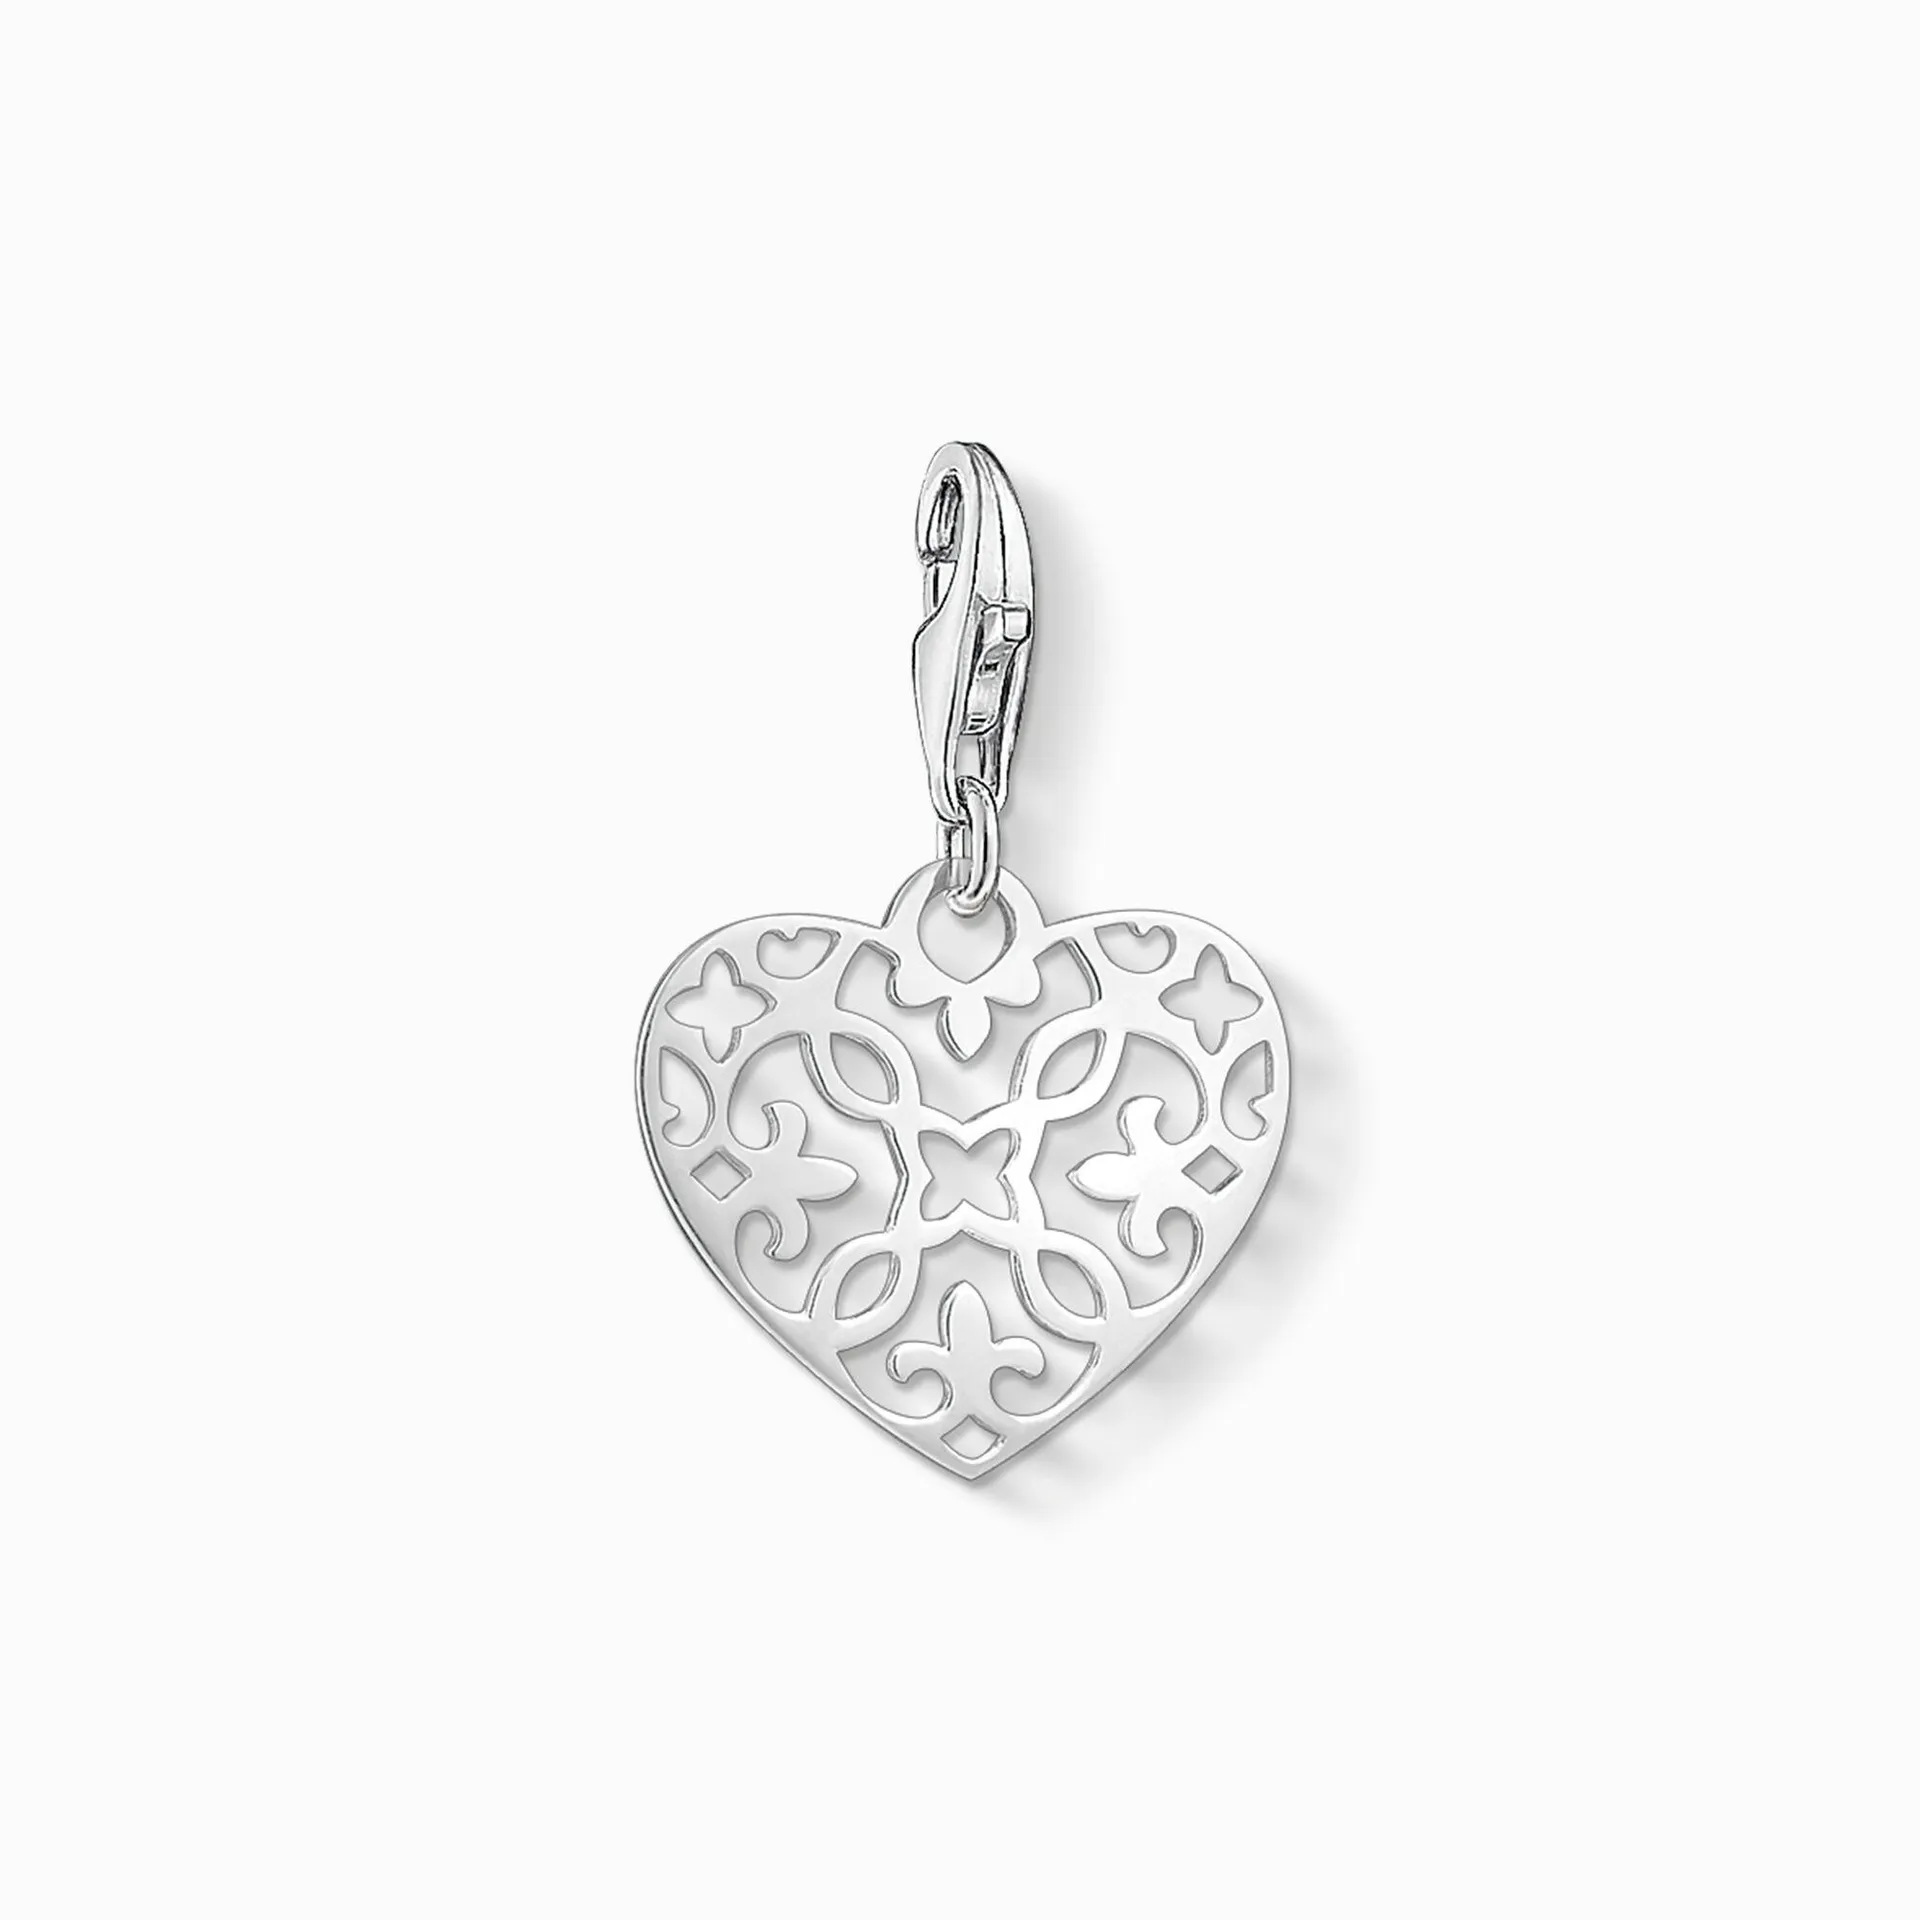 Charm pendant ornament heart